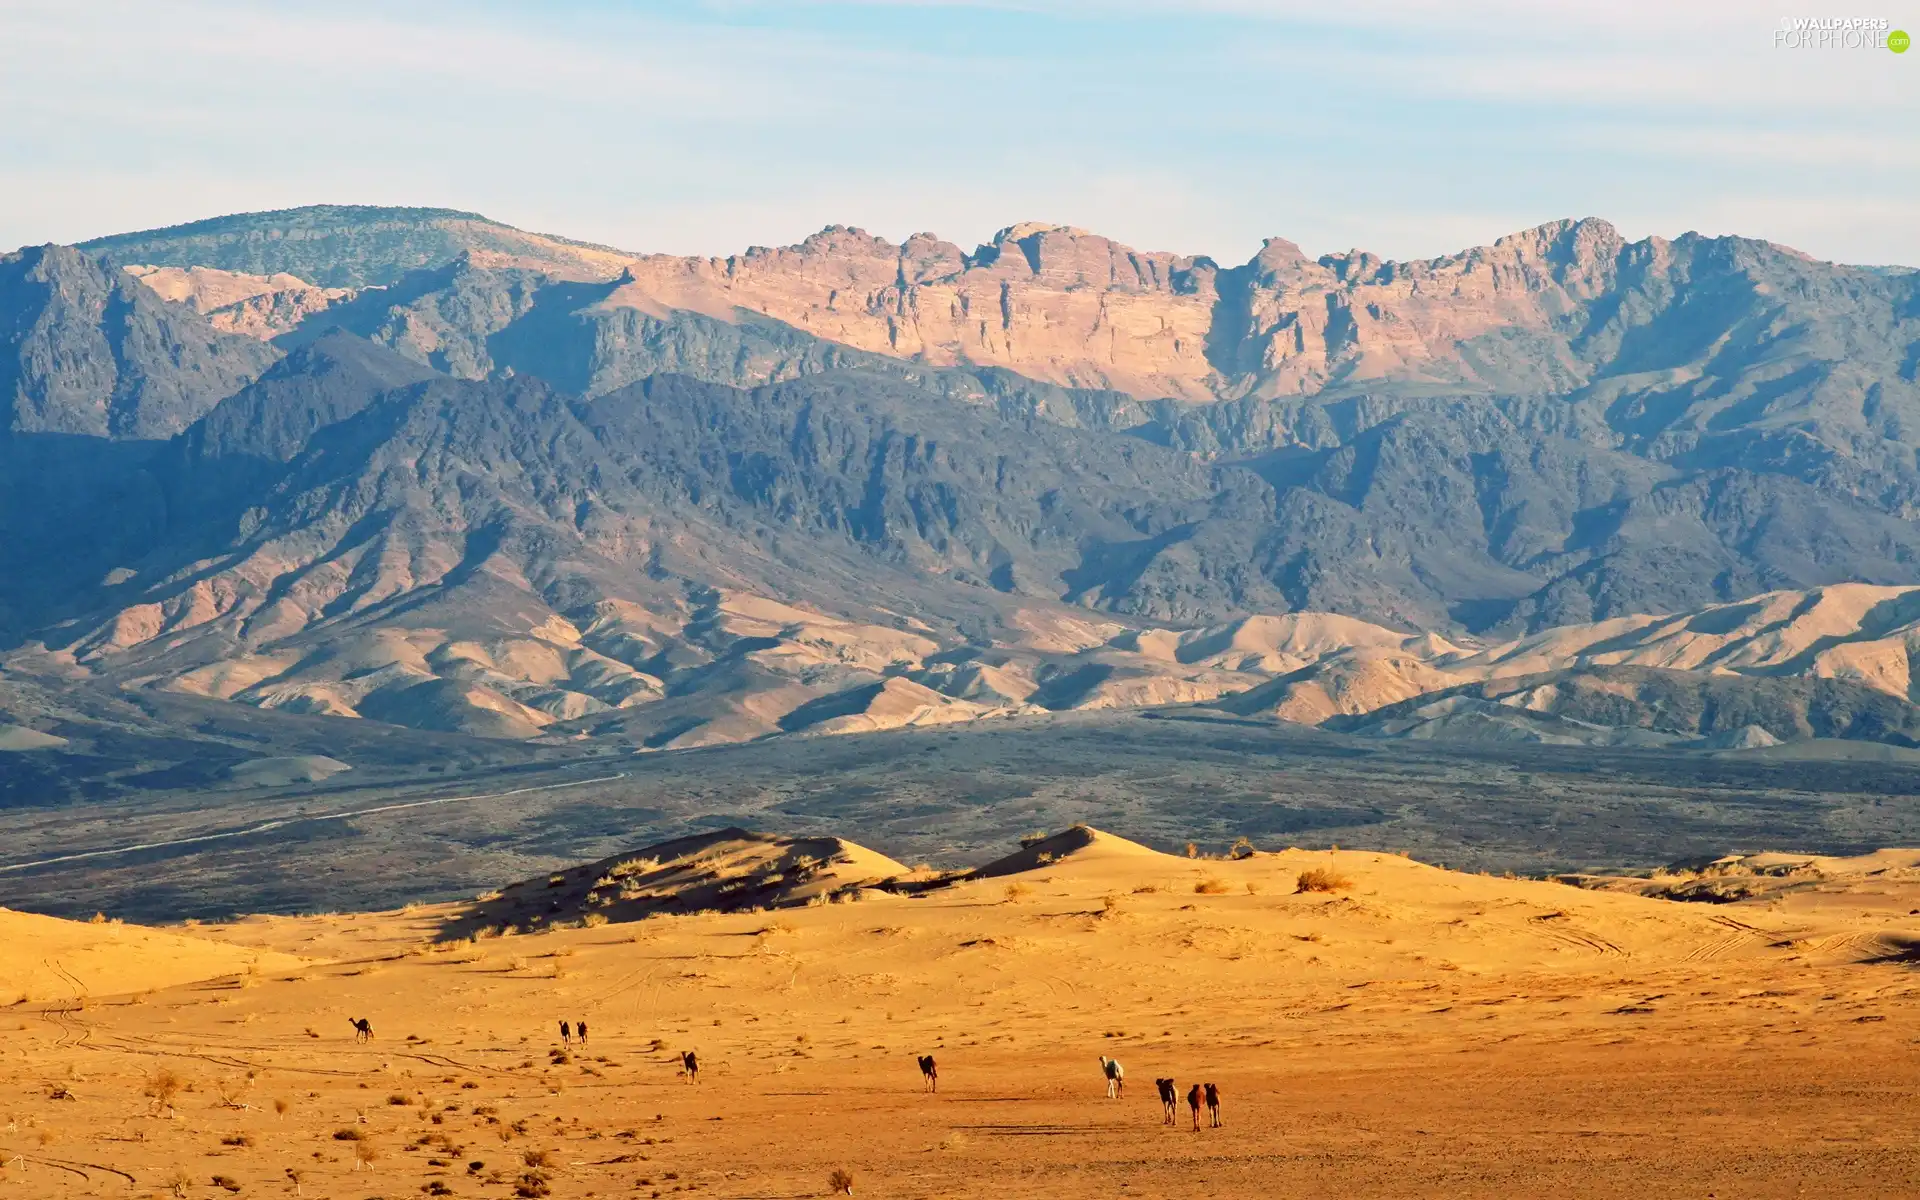 Camels, Desert, Mountains